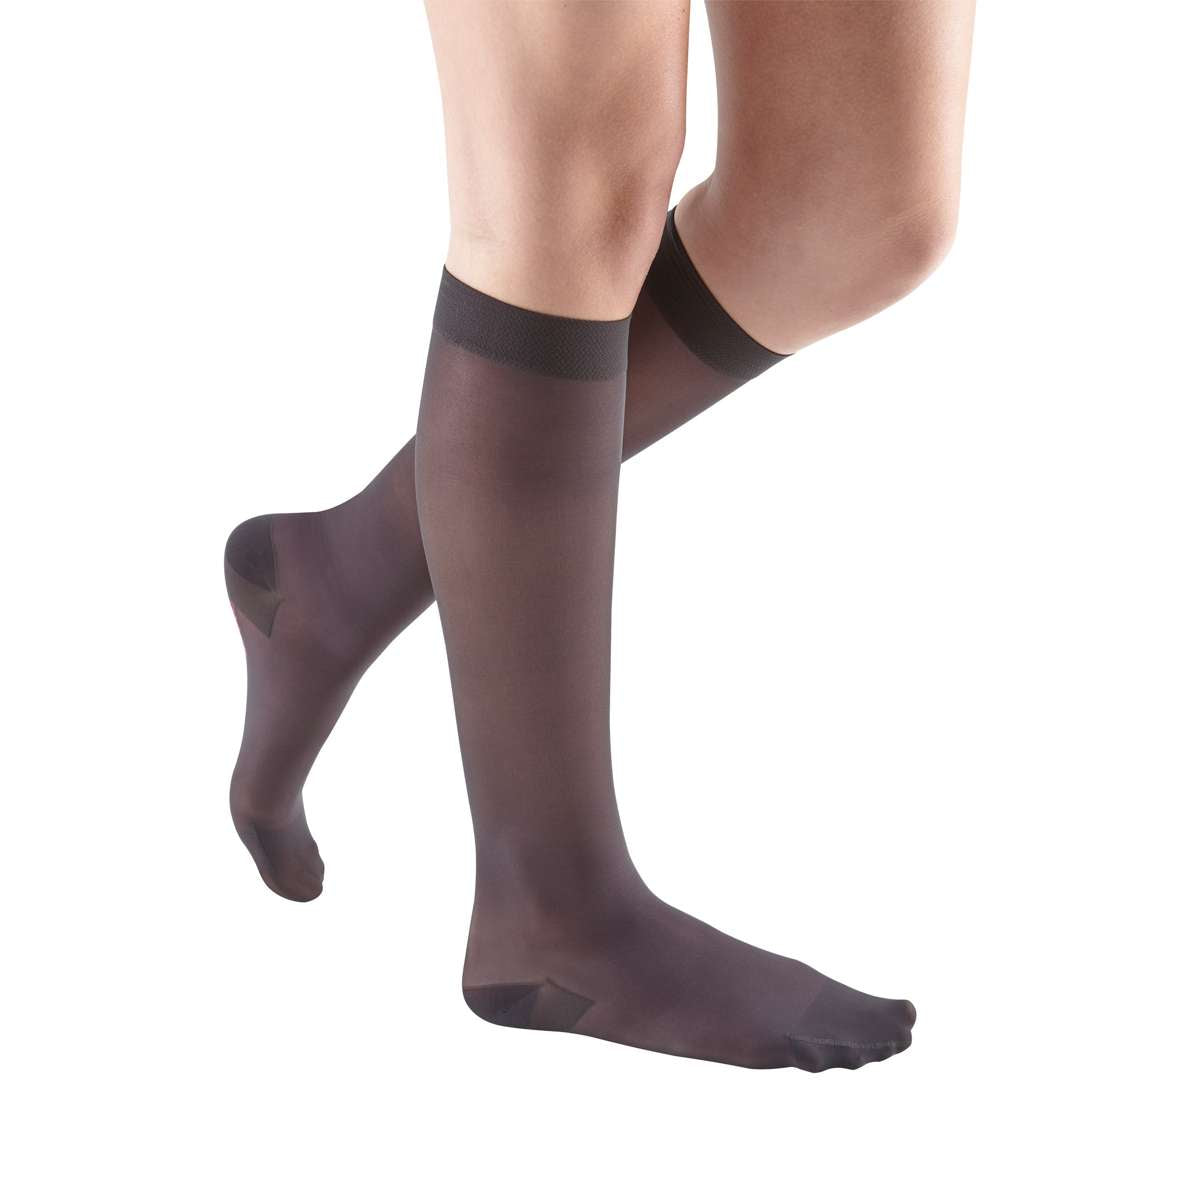 mediven sheer & soft 20-30 mmHg calf closed toe standard